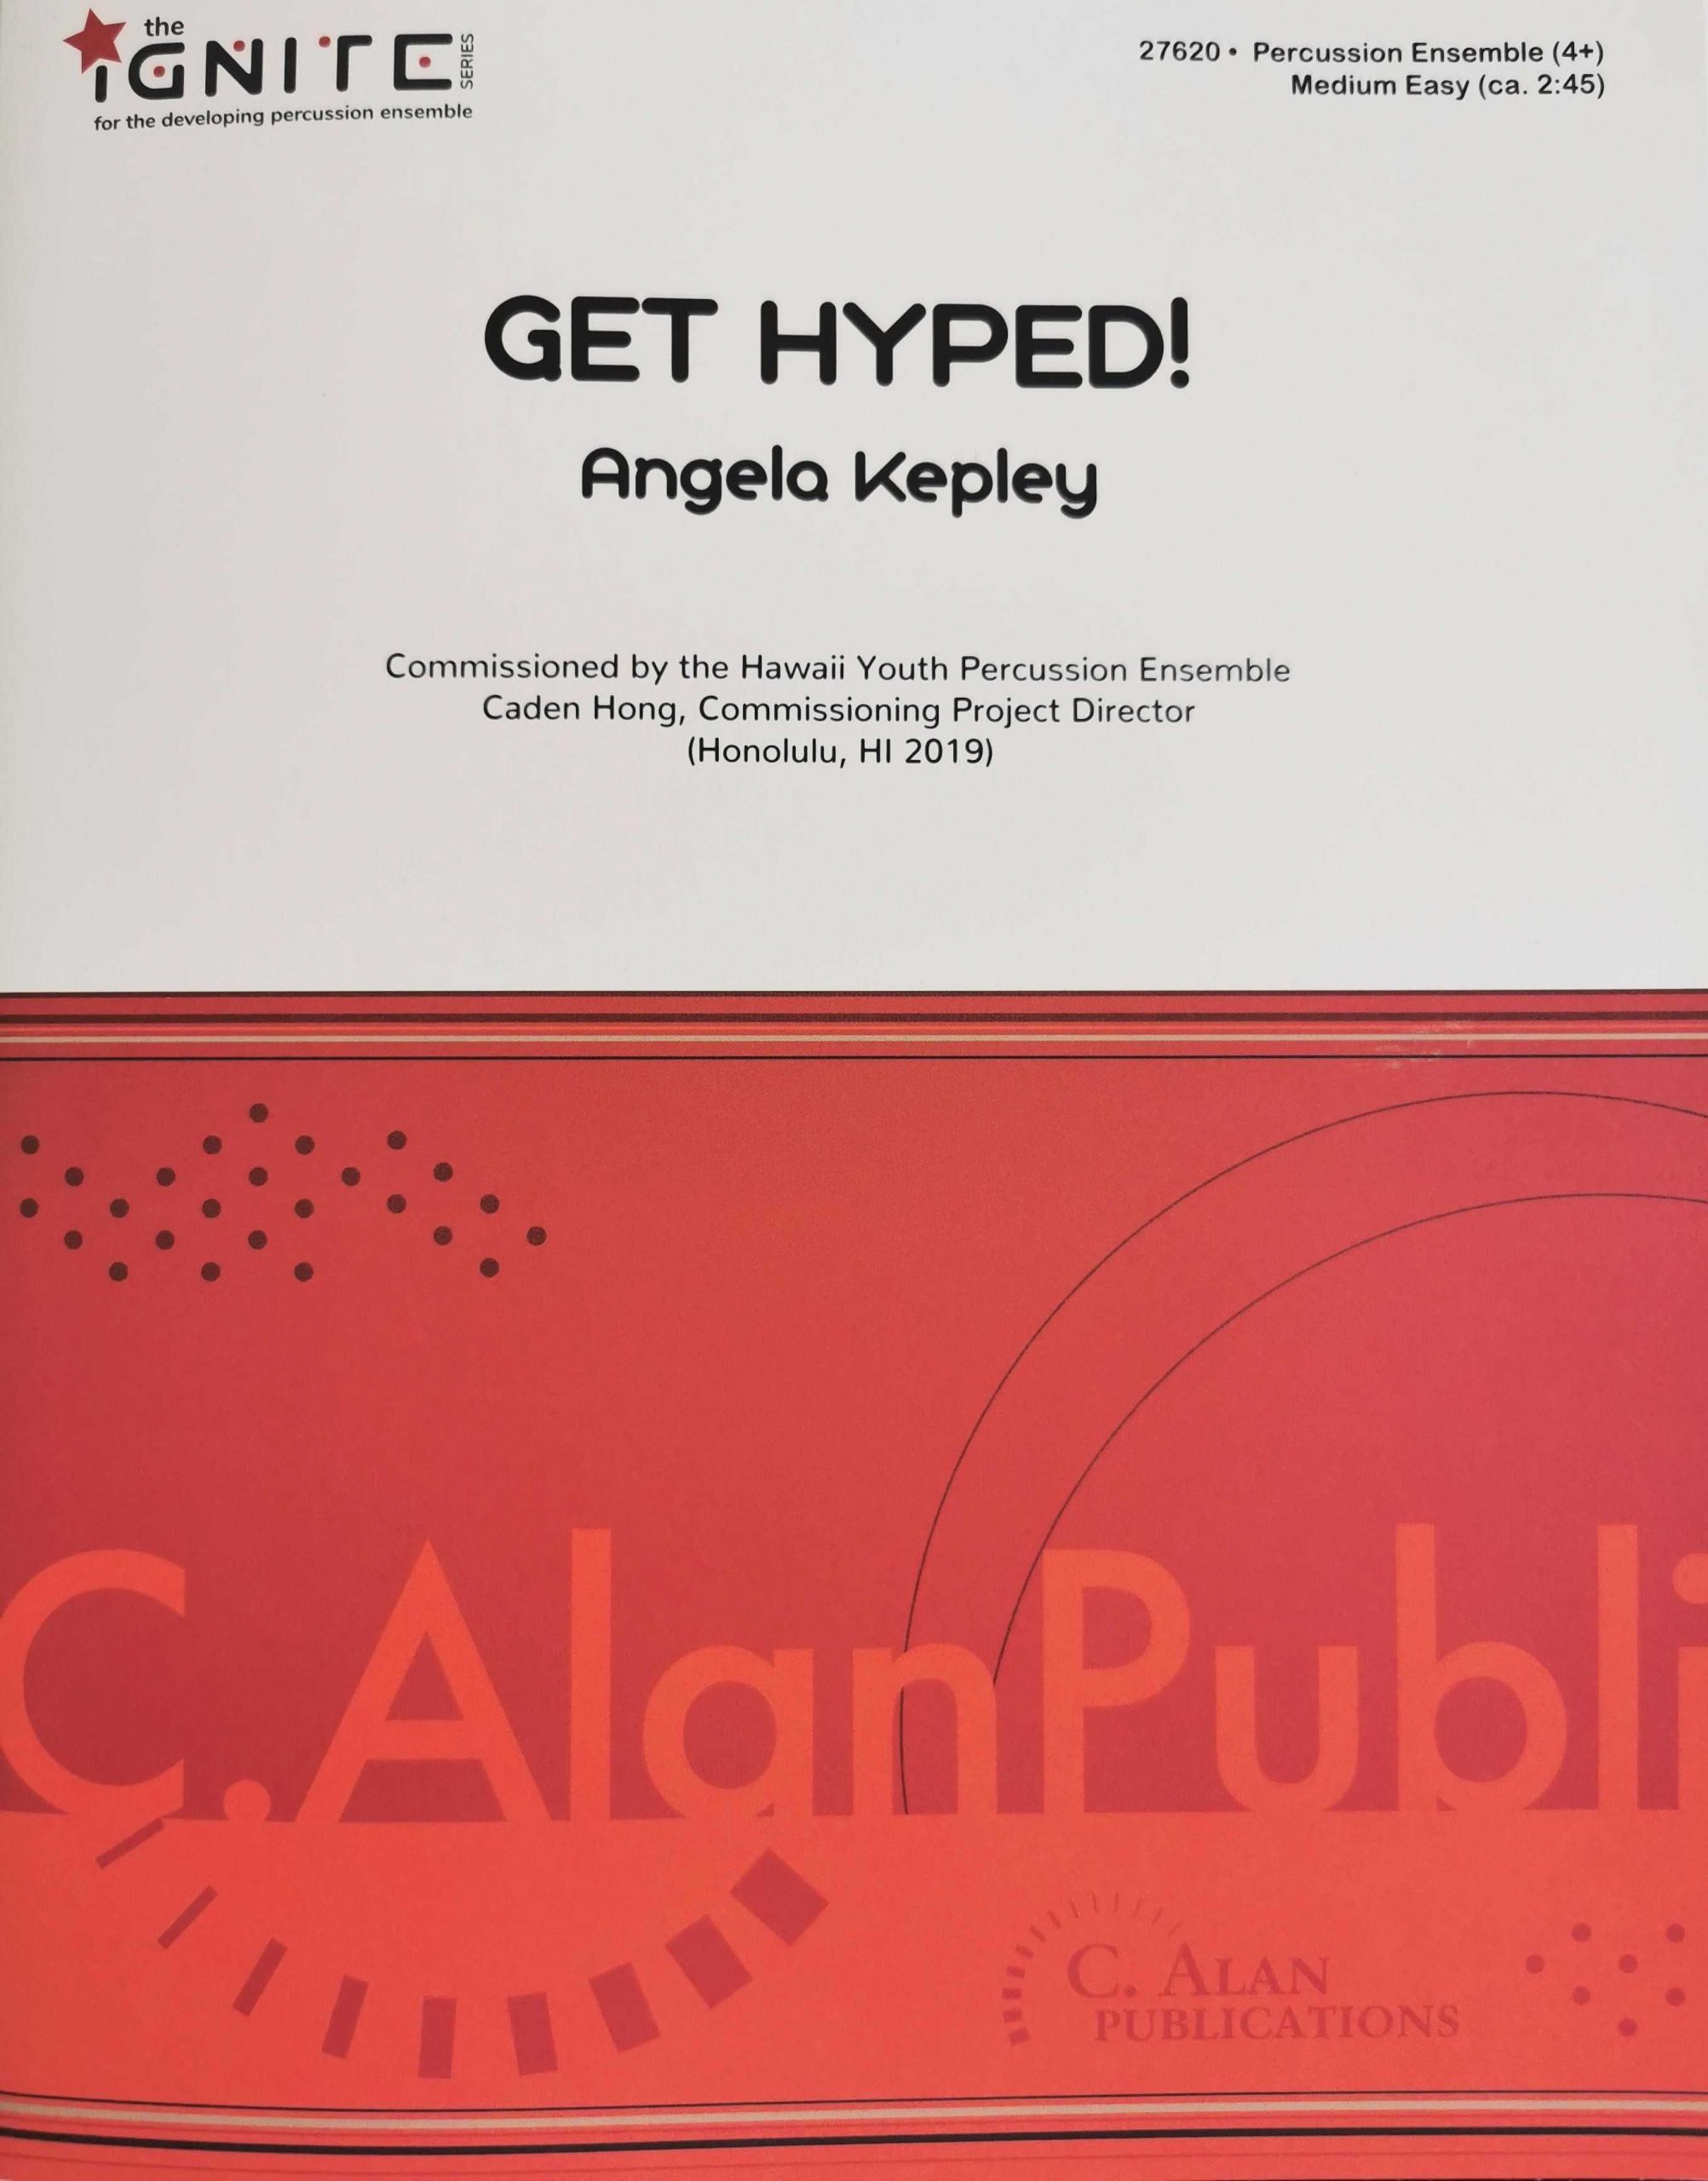 Get Hyped! by Angela Kepley